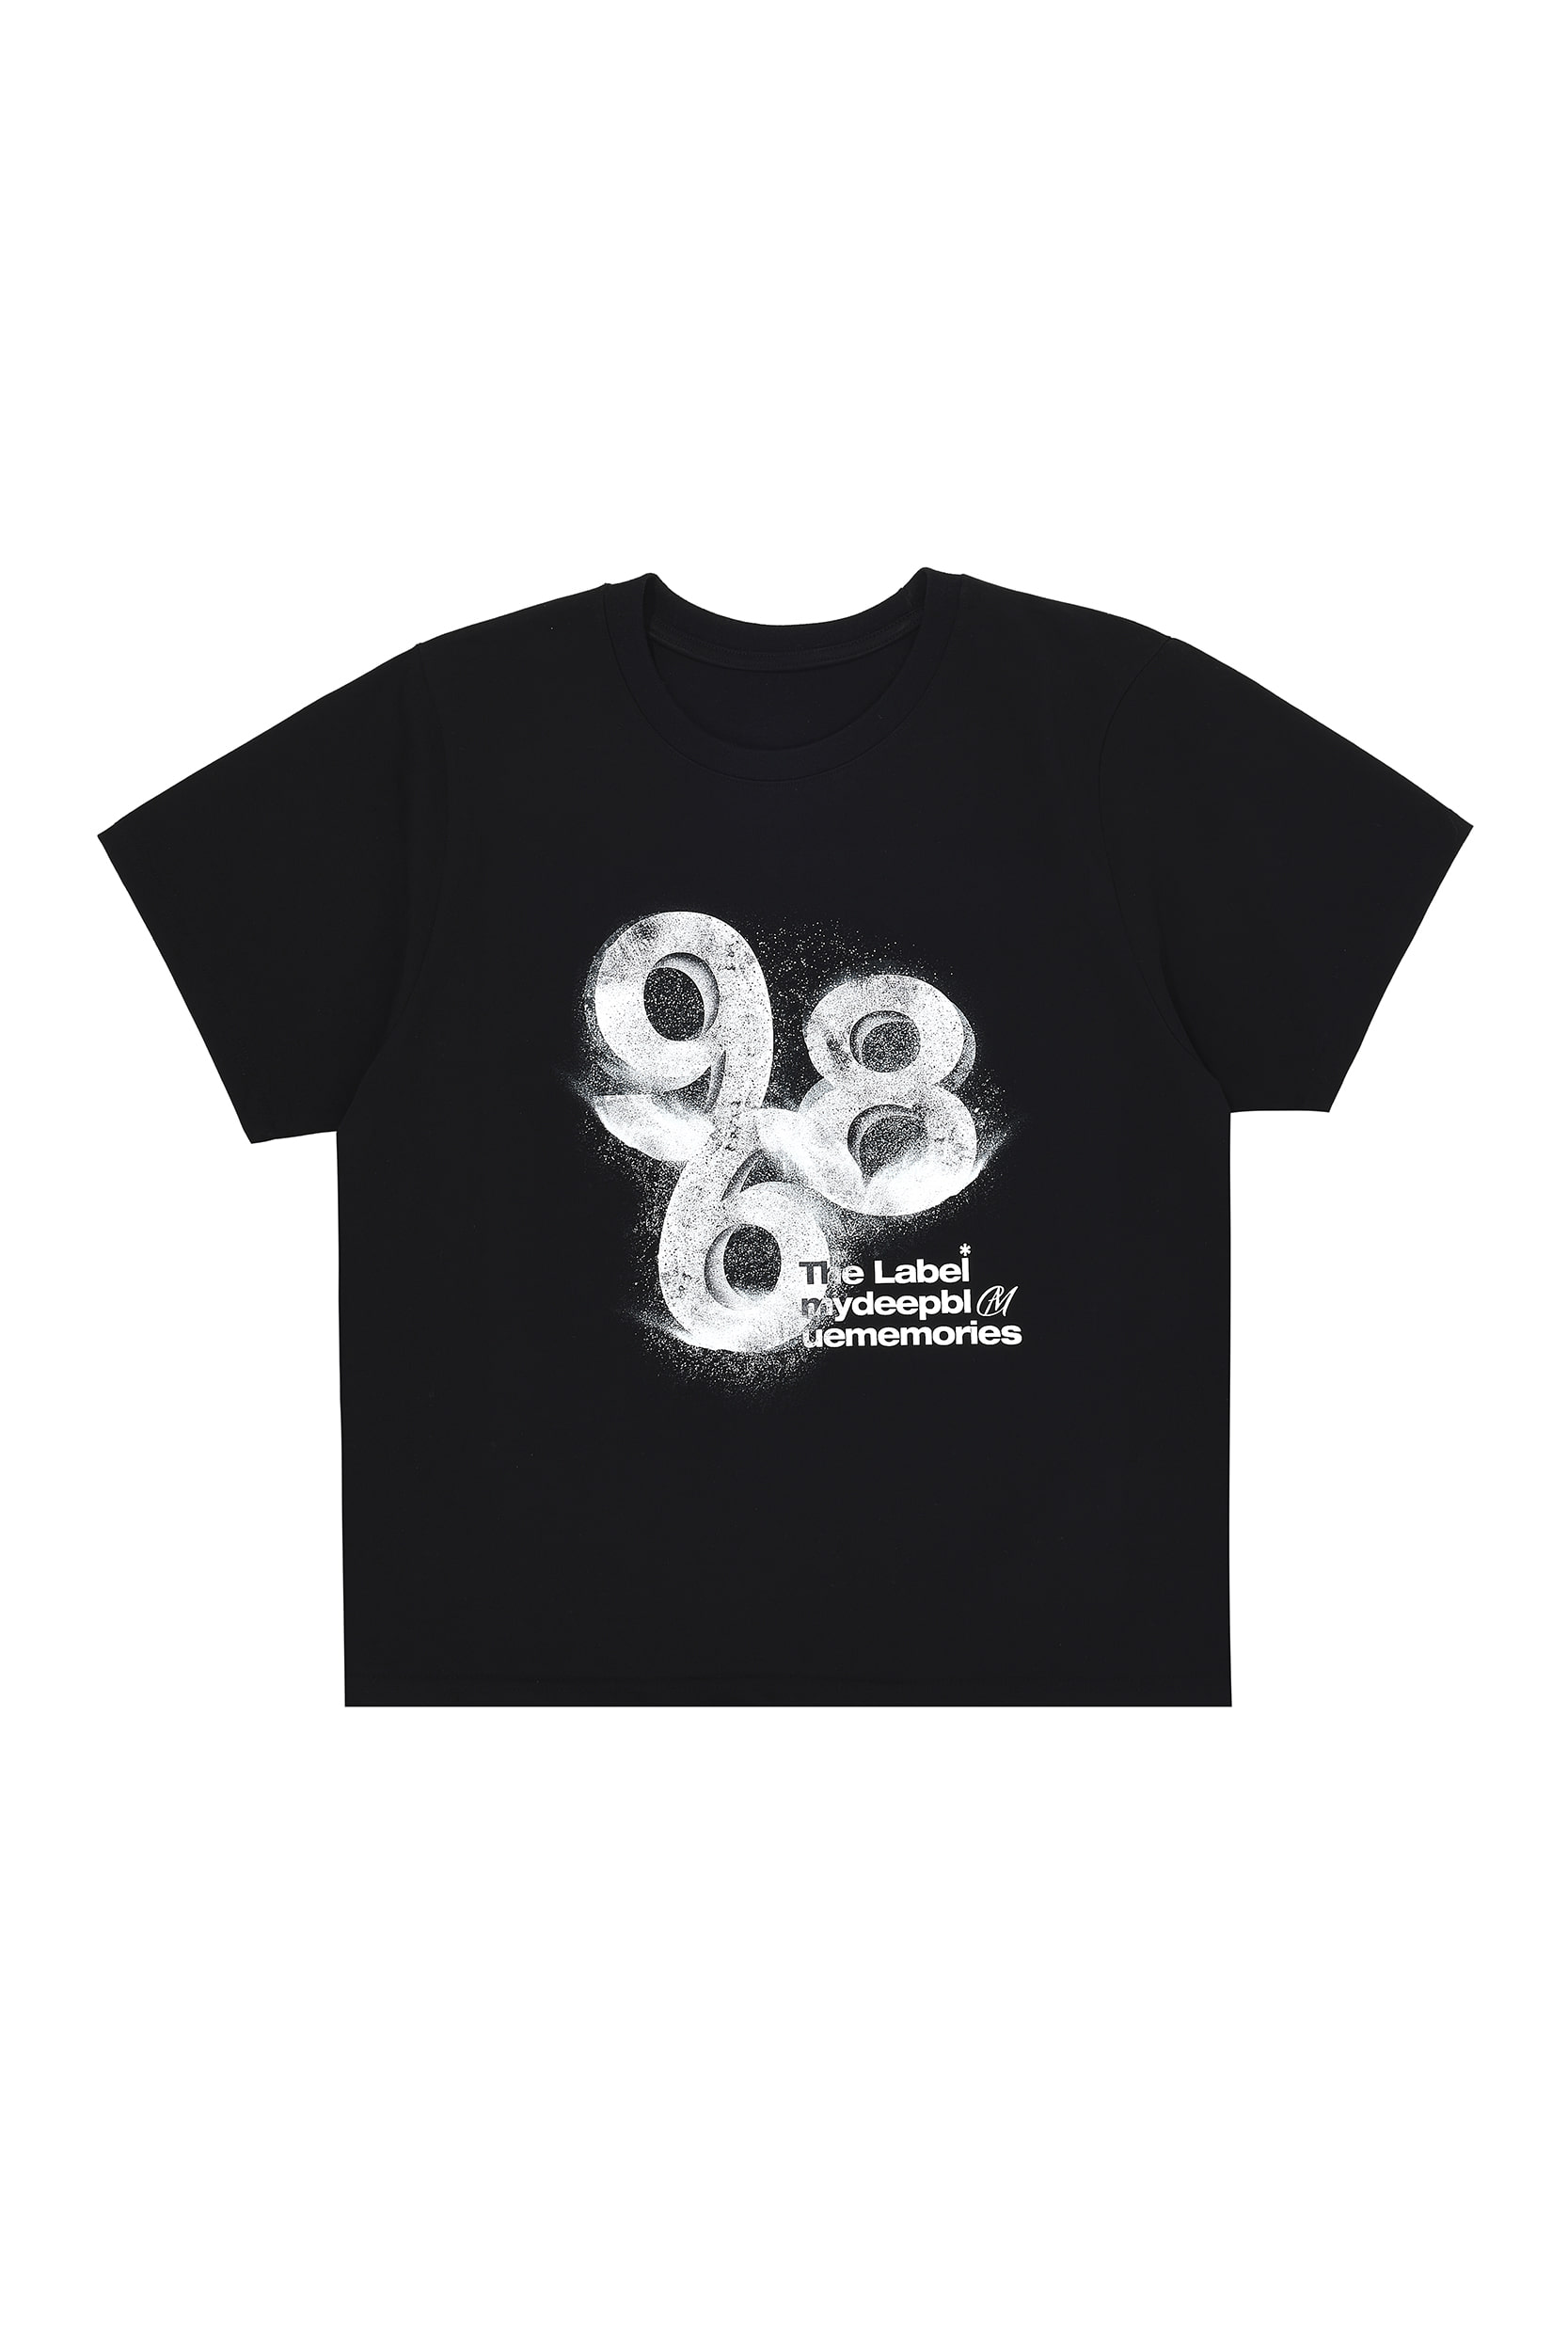 986 hotfix t-shirts in black